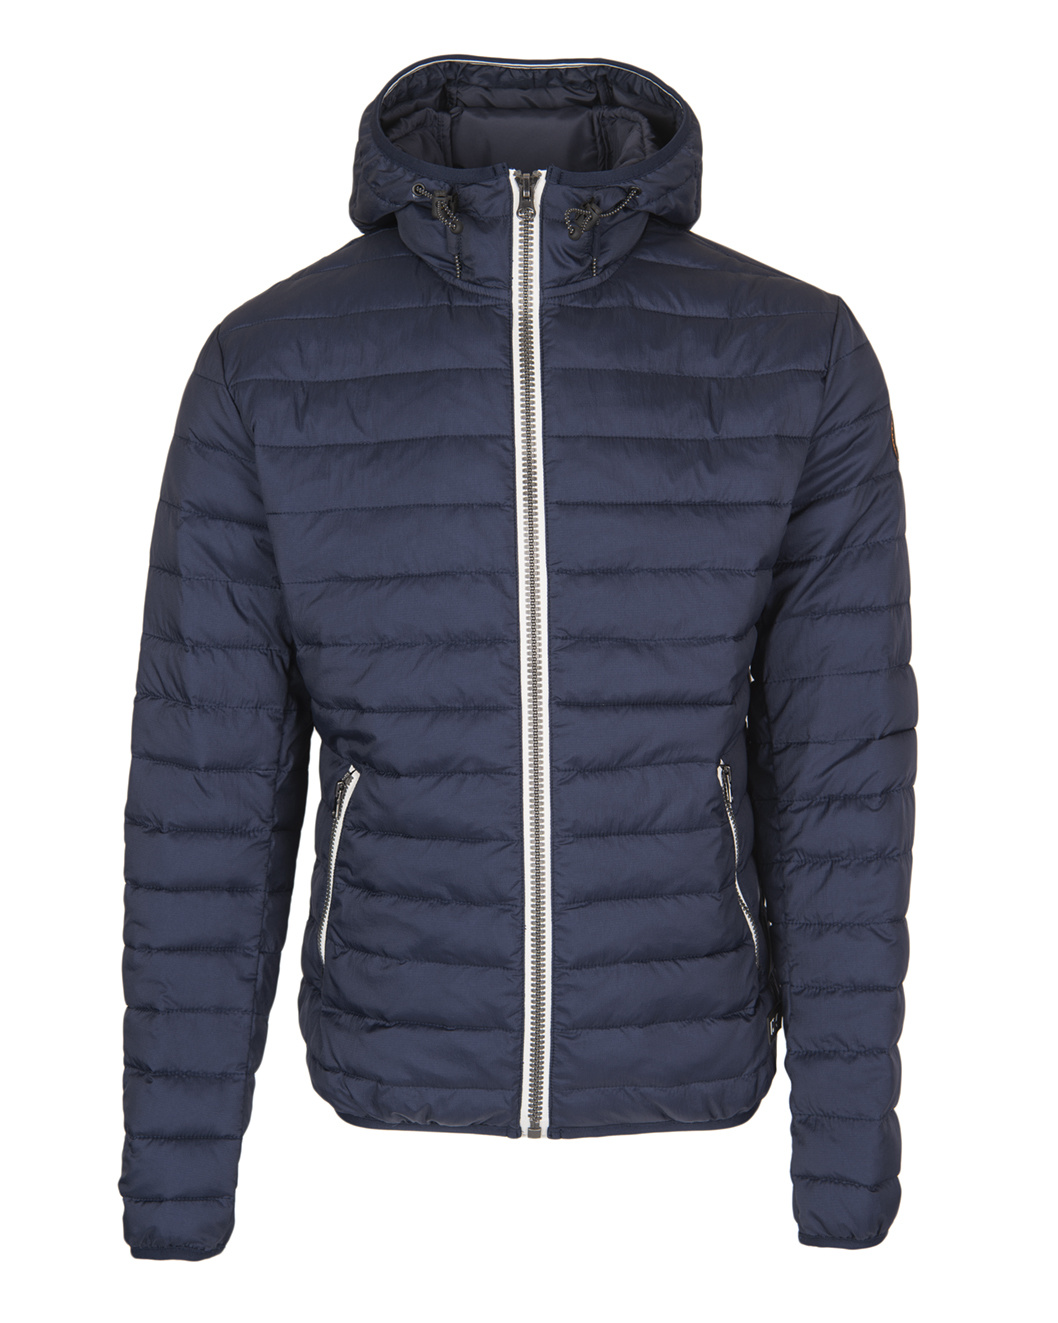 All weather lightweight Nautilus puffer jacket